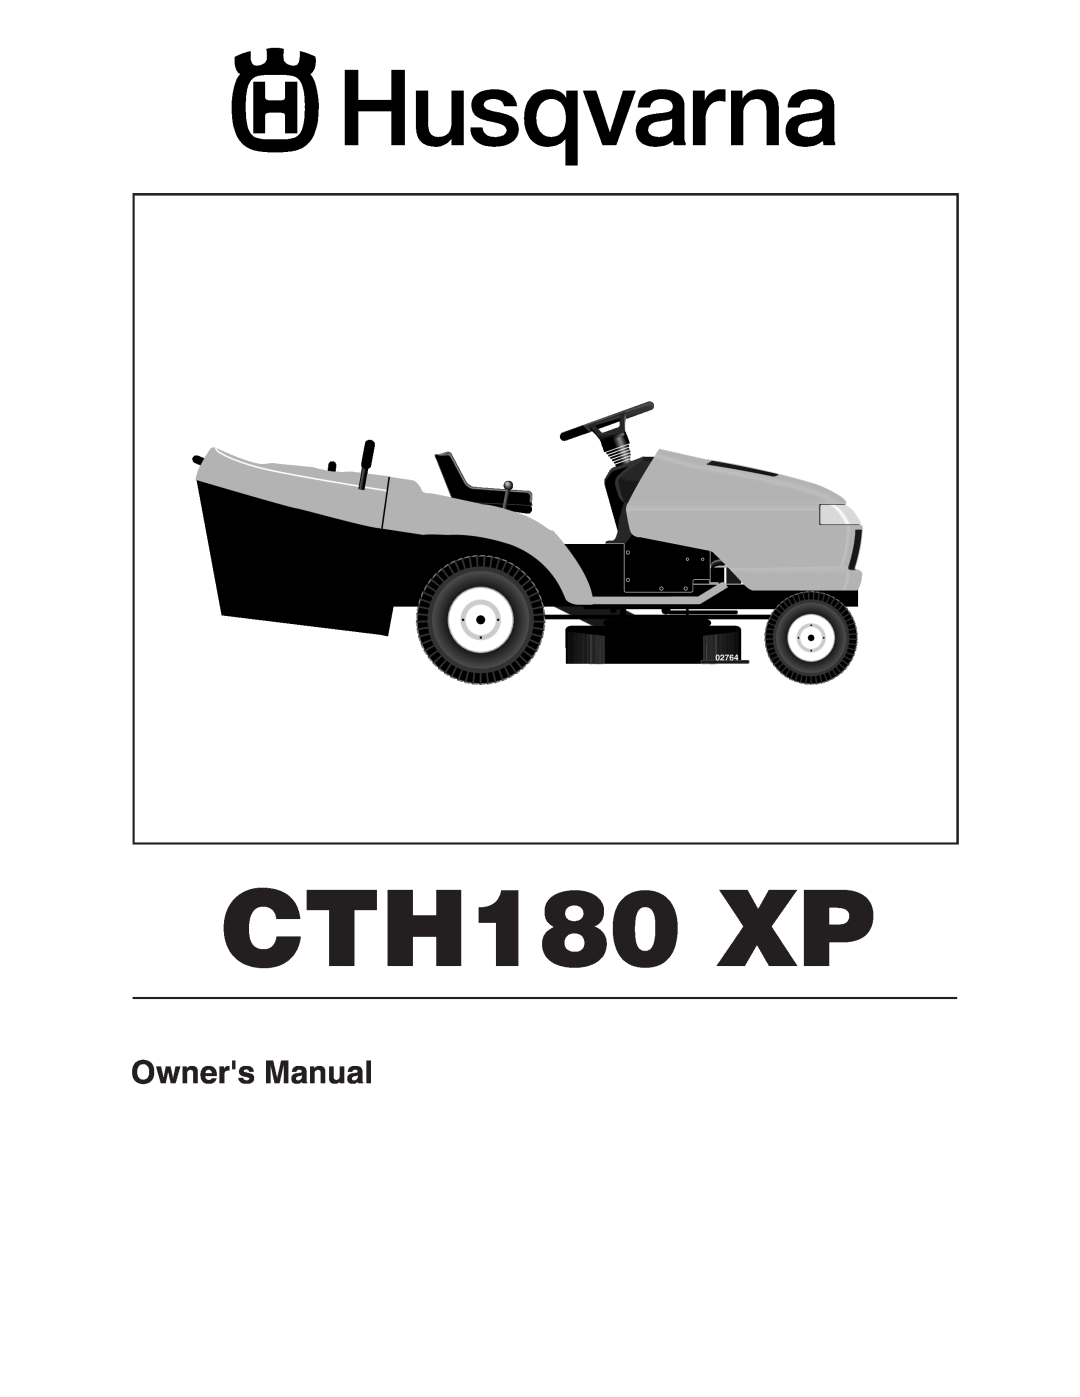 Husqvarna CTH180 XP owner manual 02764 